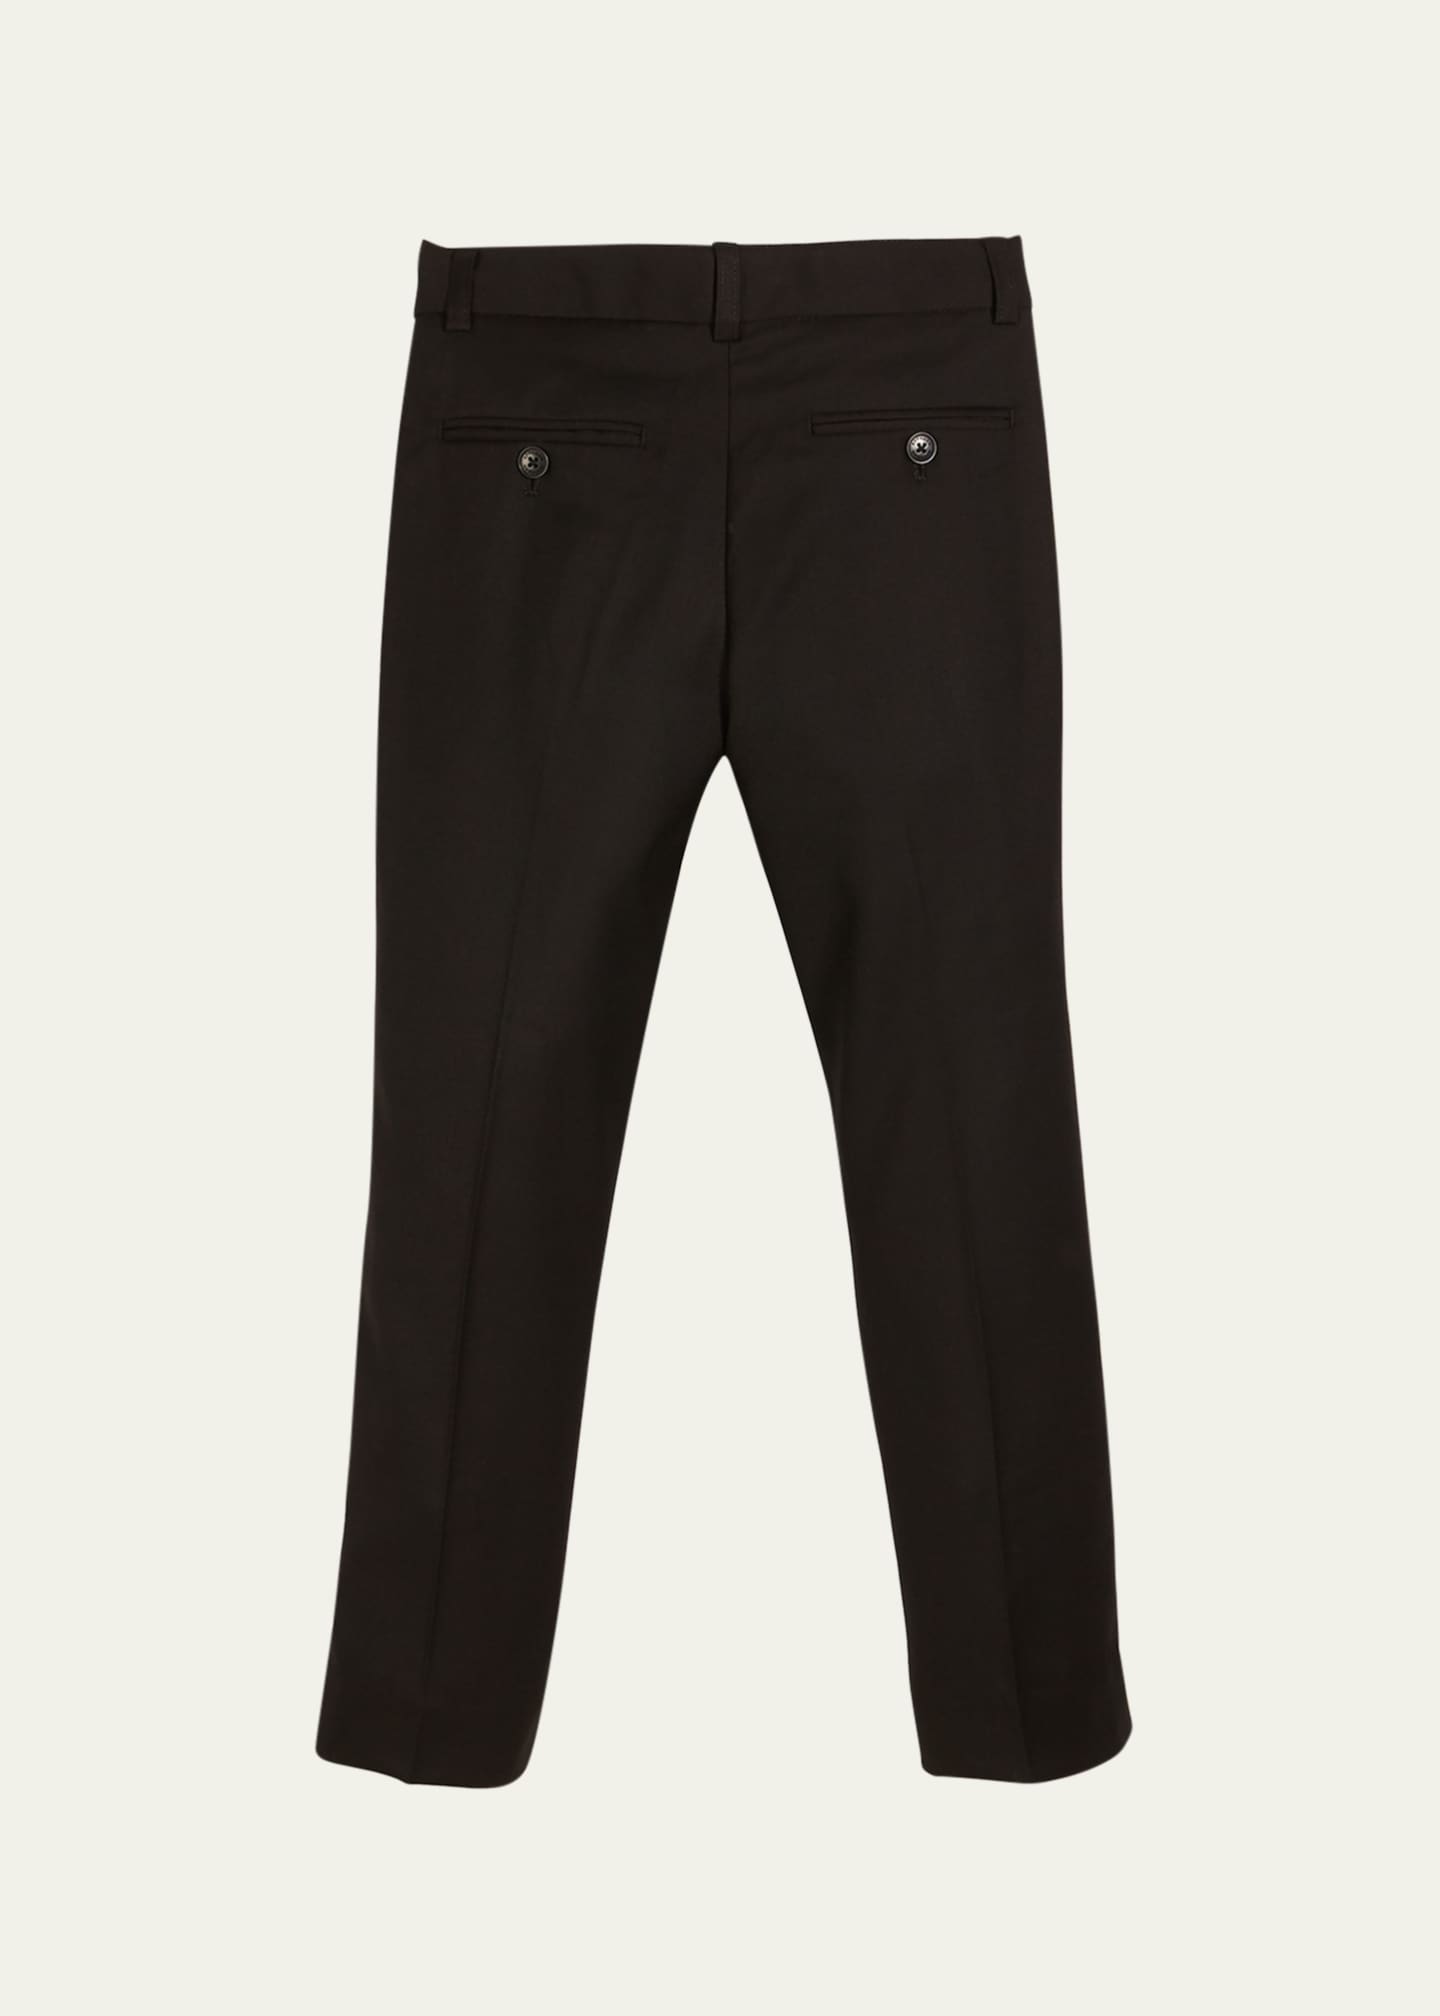 Appaman Slim Suit Pants, Black, Size 4-14 Image 2 of 2